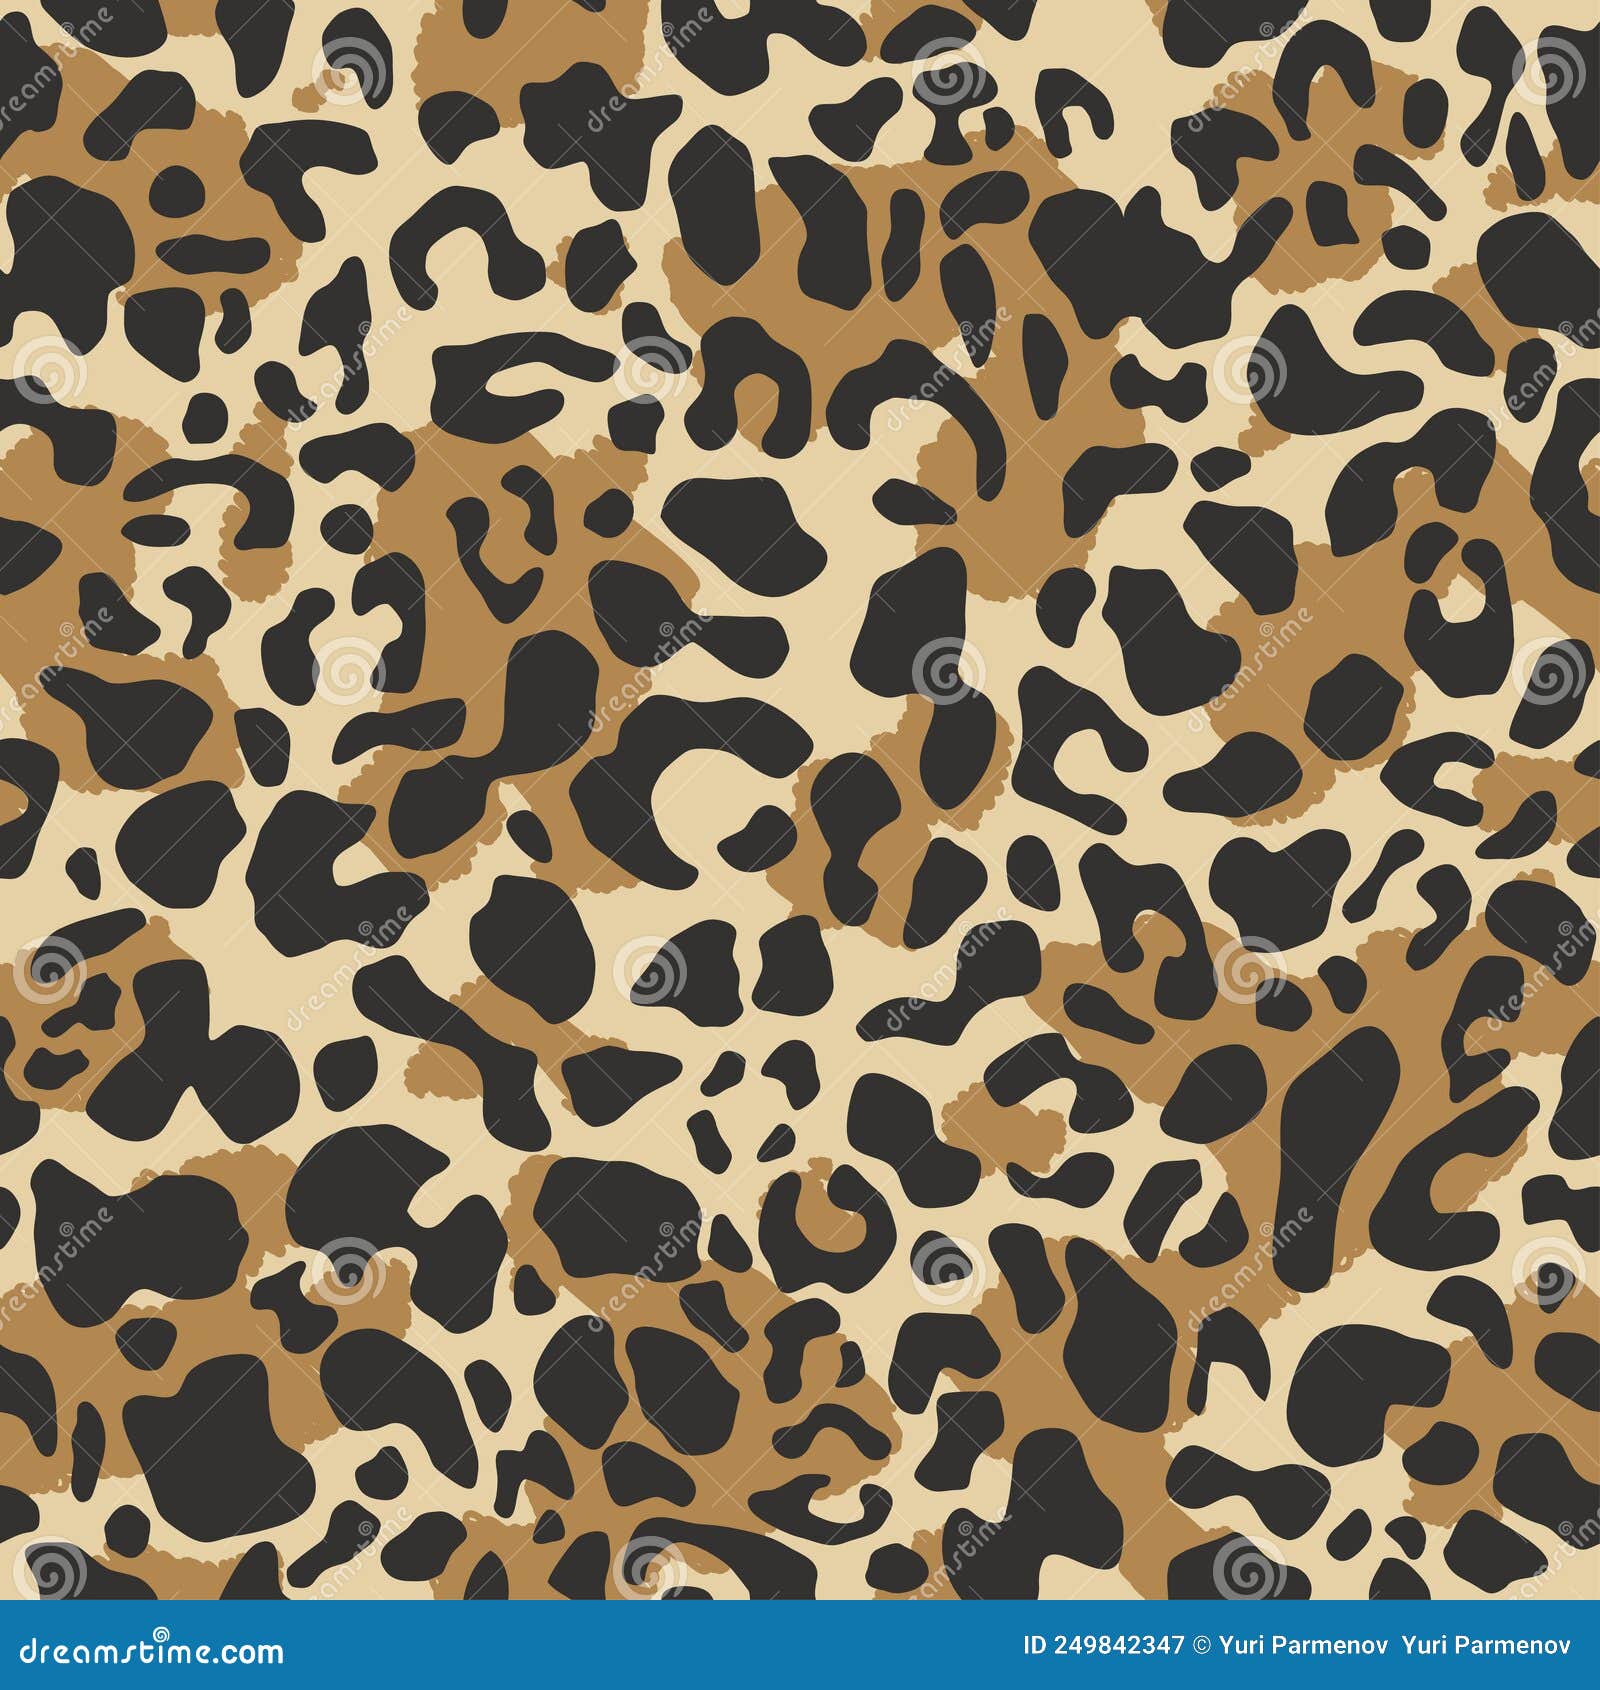 Leopard Wallpaper  Leopard wallpaper, Jaguar wallpaper, Animal wallpaper